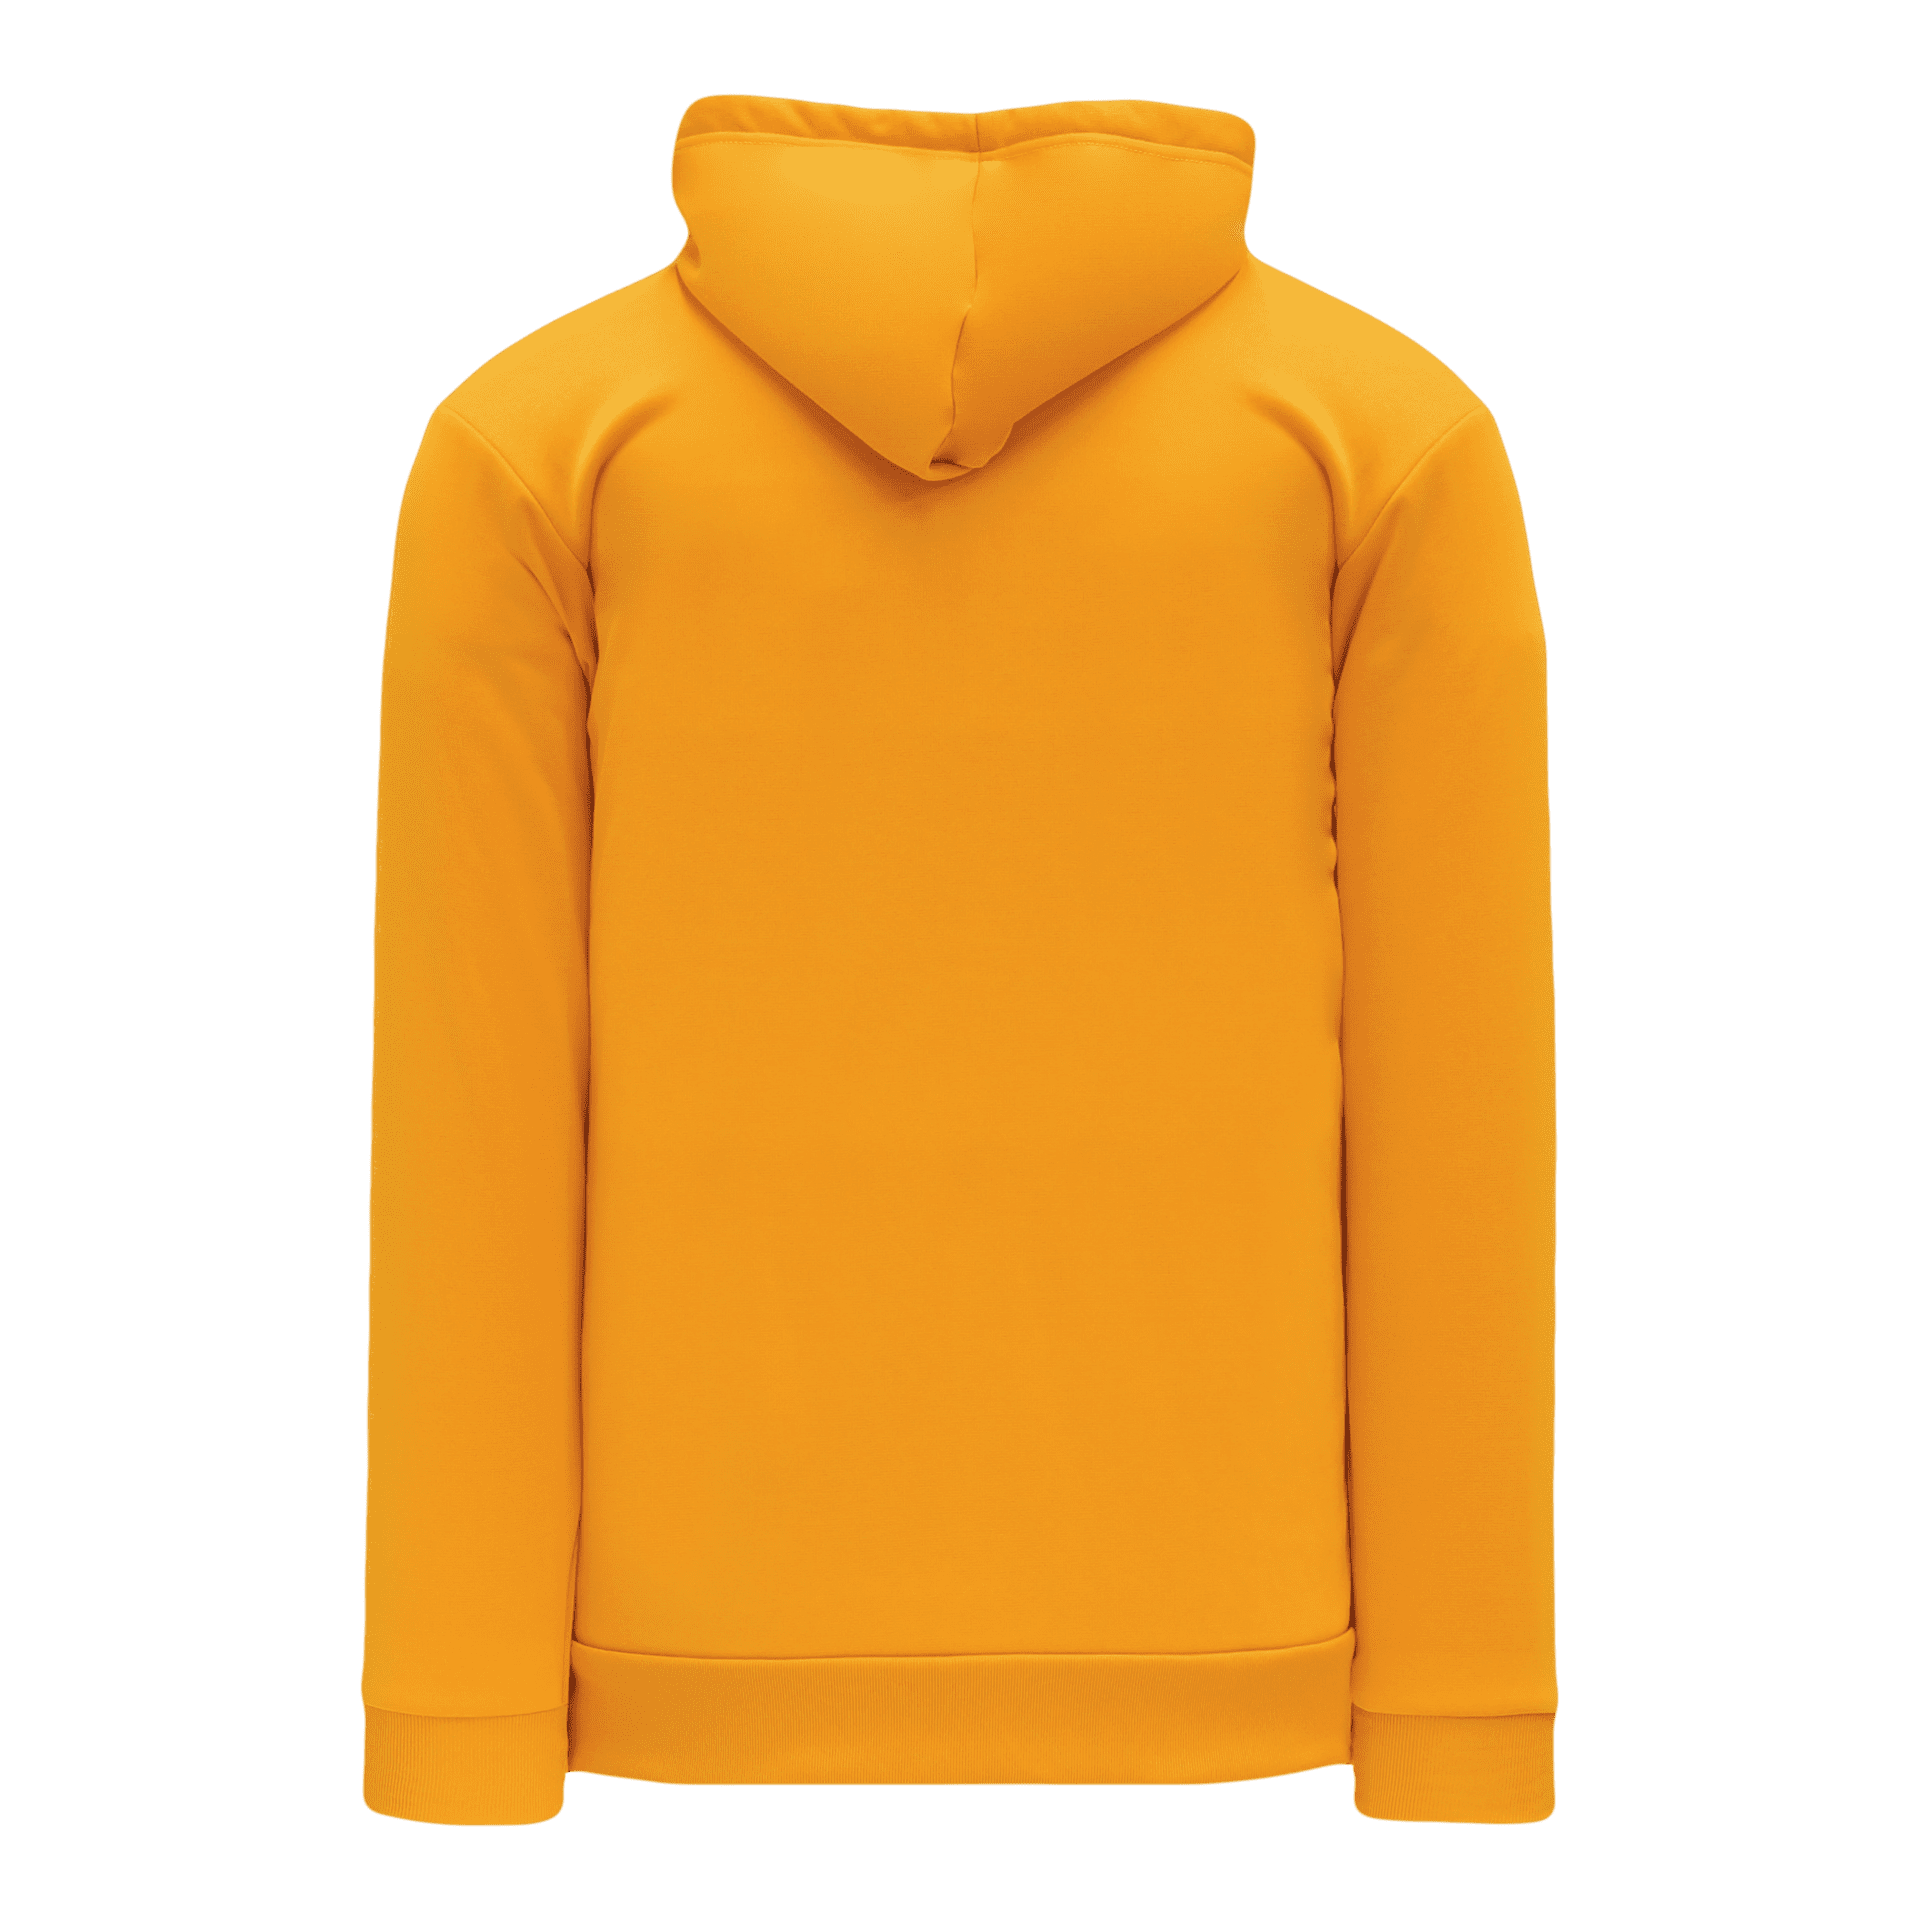 ATHLETIC KNIT Polyfleece Hooded Sweatshirt #A1835 Gold Back